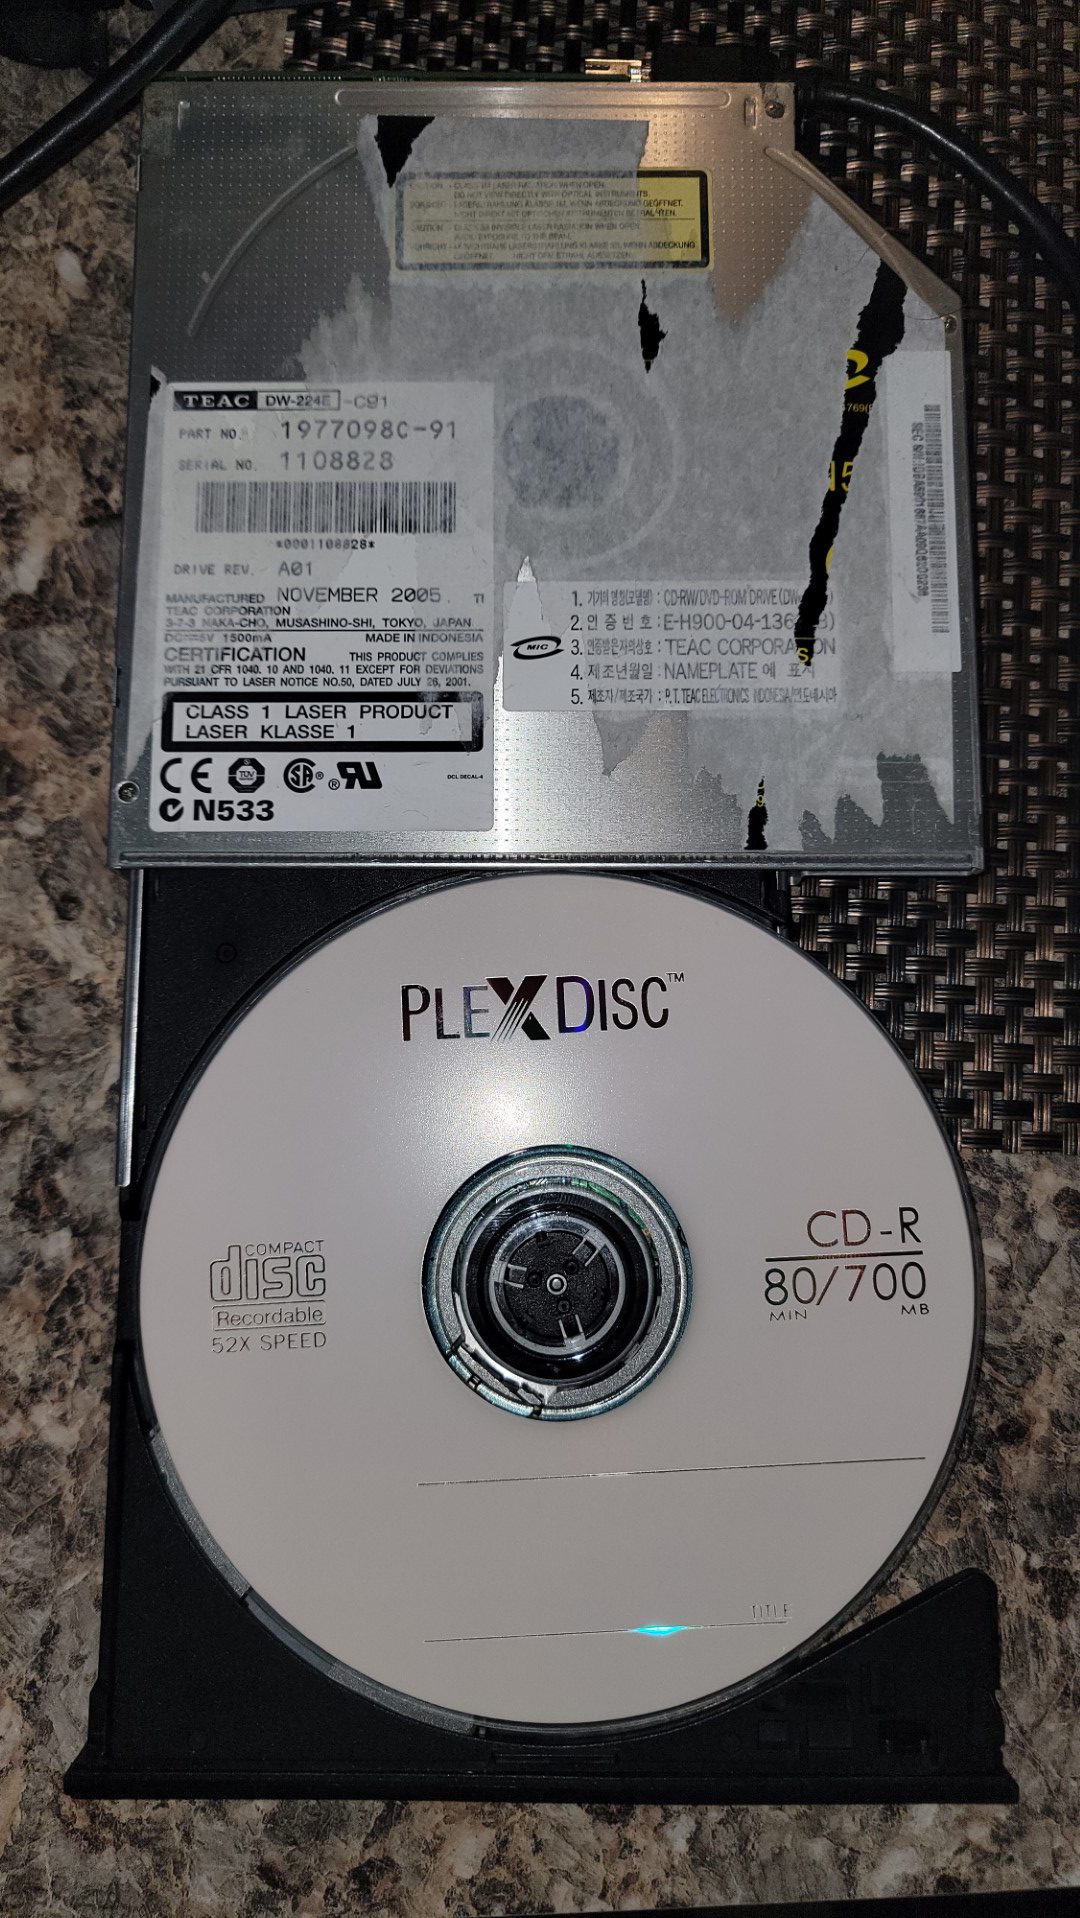 Plexdisc CD-R on TEAC DW-224E-C